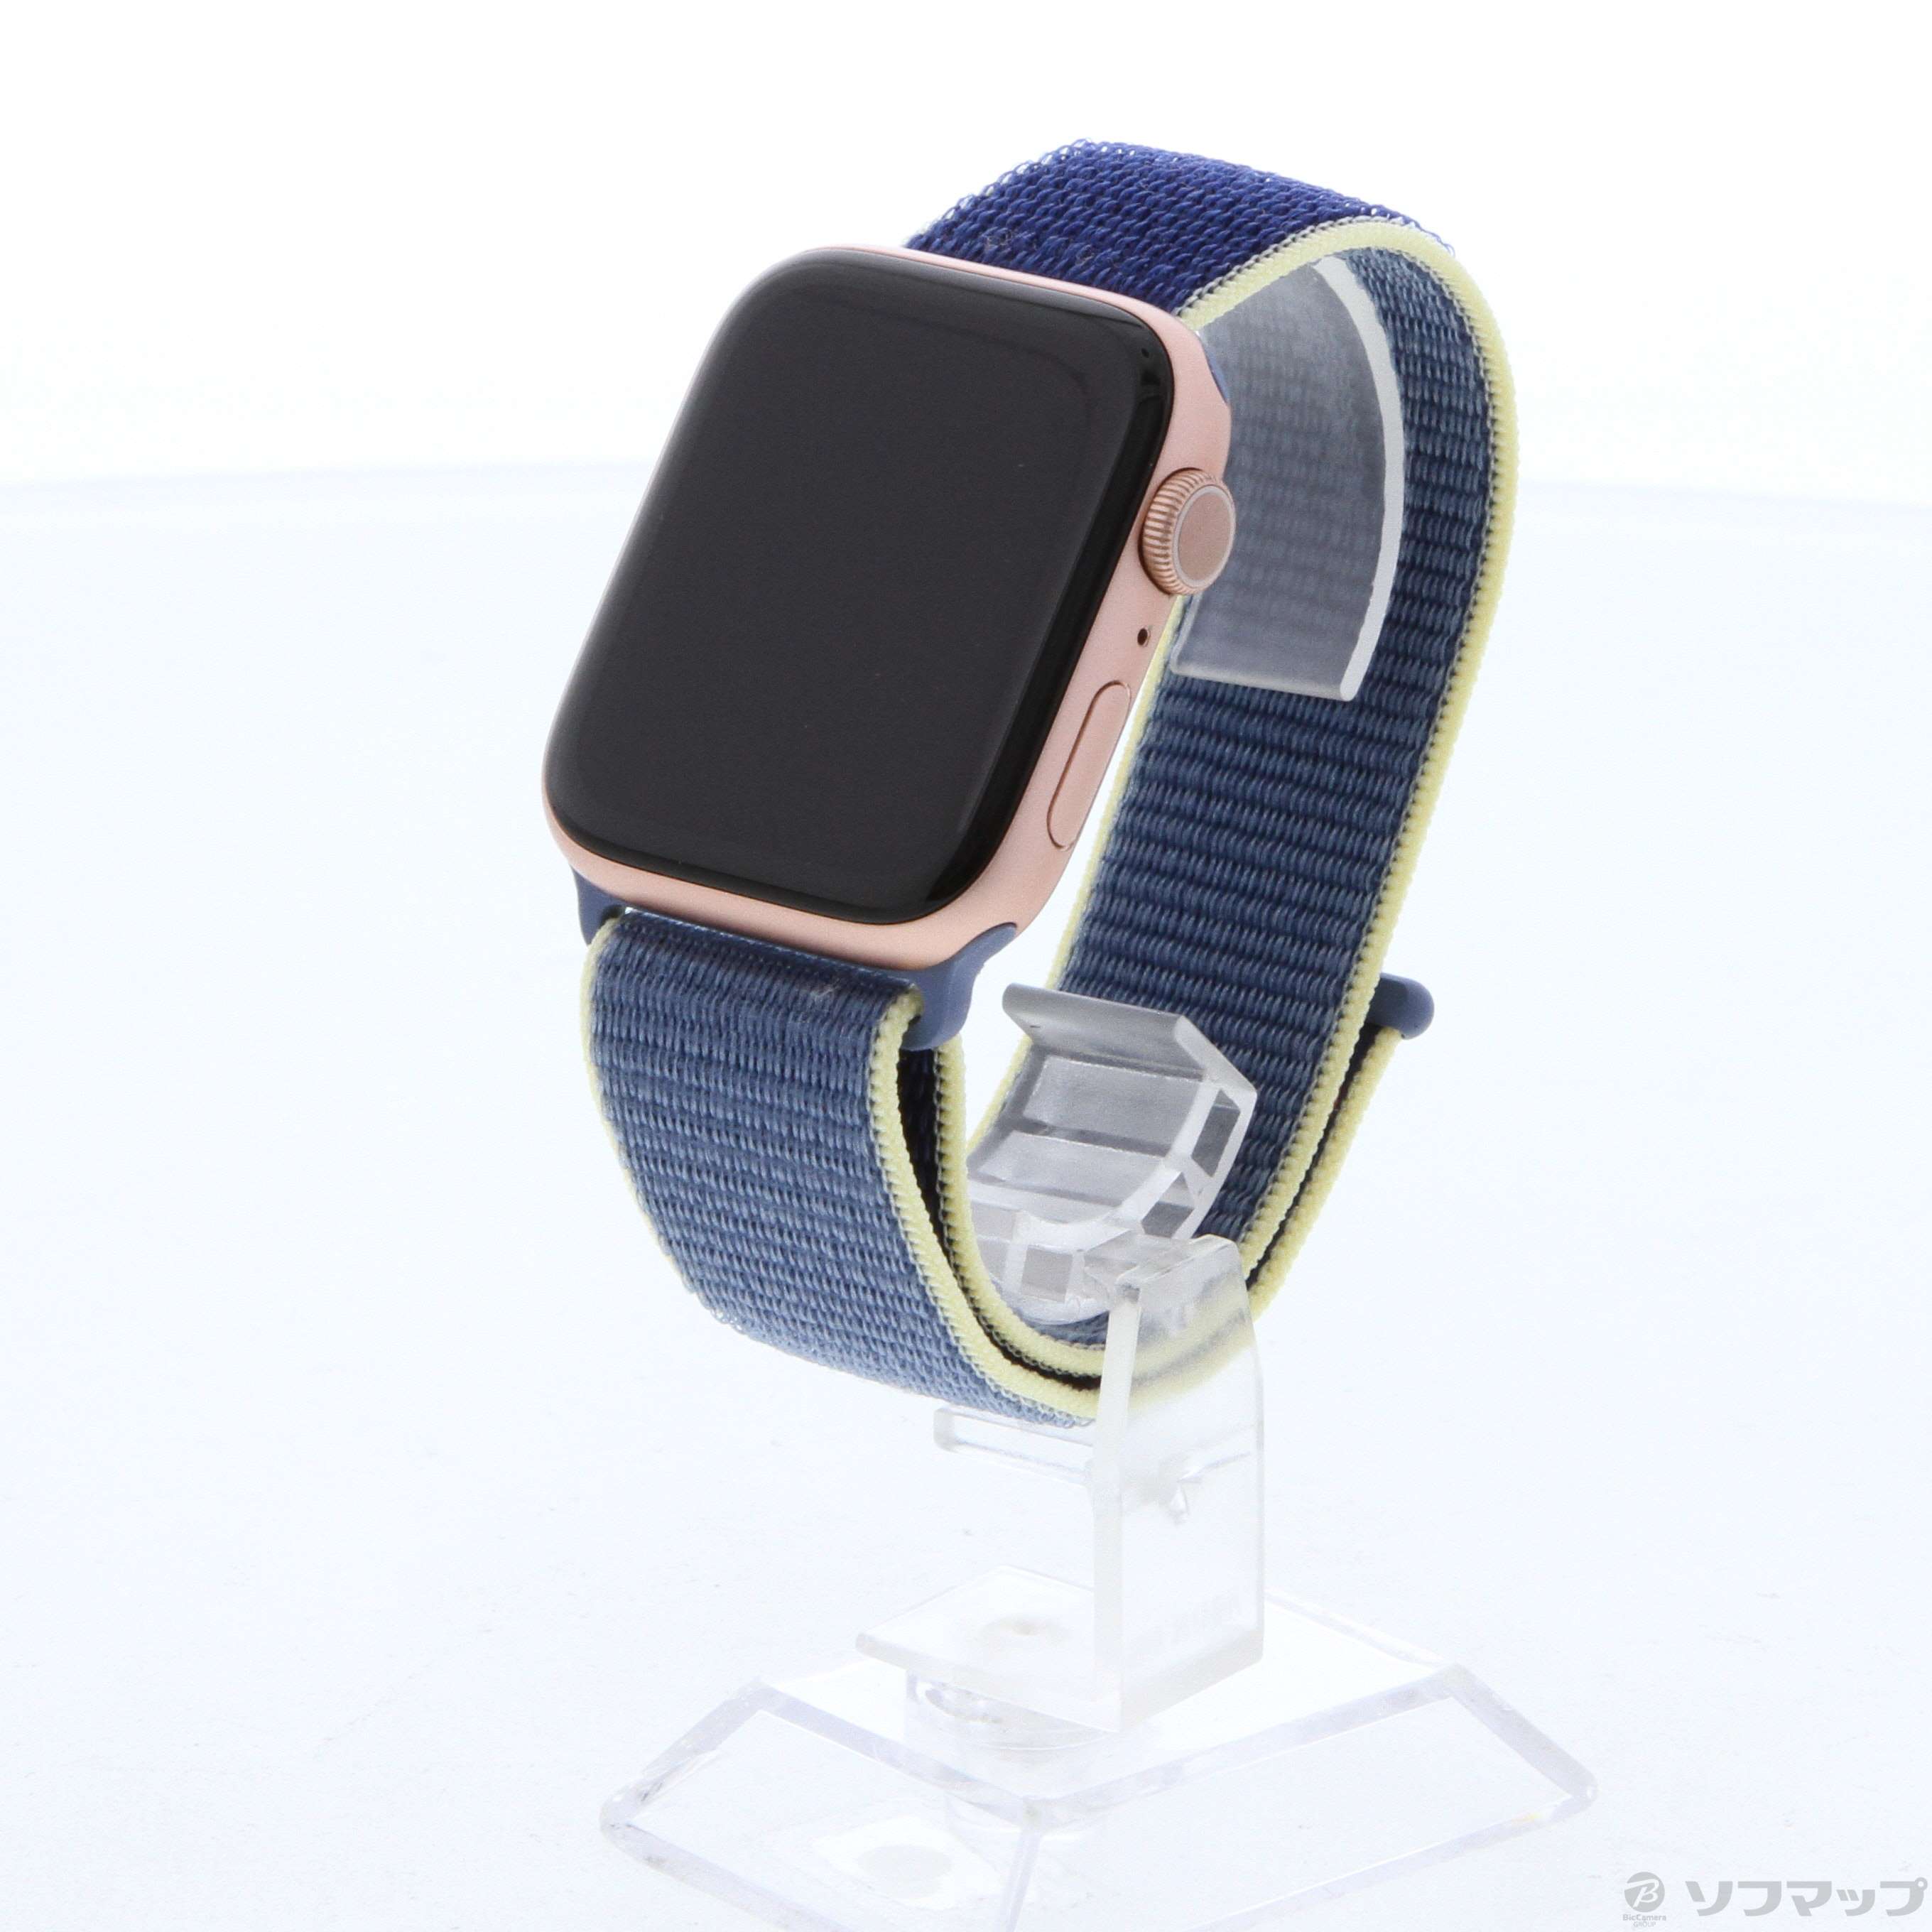 Apple(アップル) Apple Watch Series 5 GPS 44mm ゴールドアルミニウム